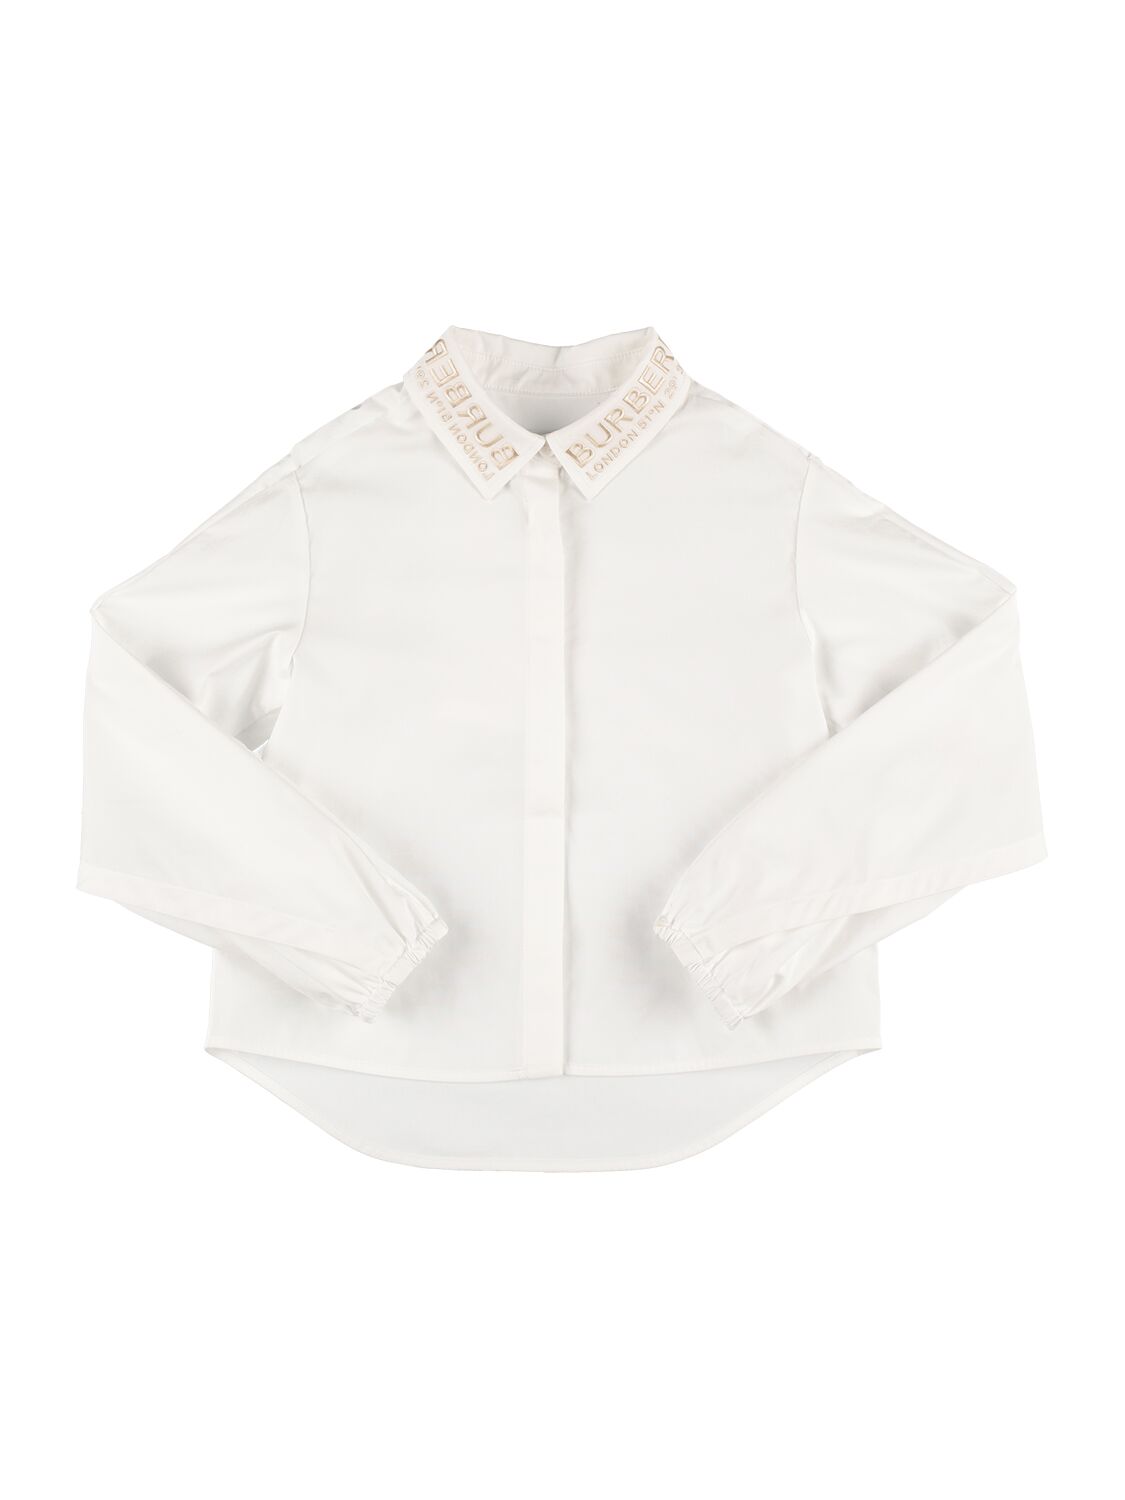 Burberry Kids' Cotton Poplin Shirt In White